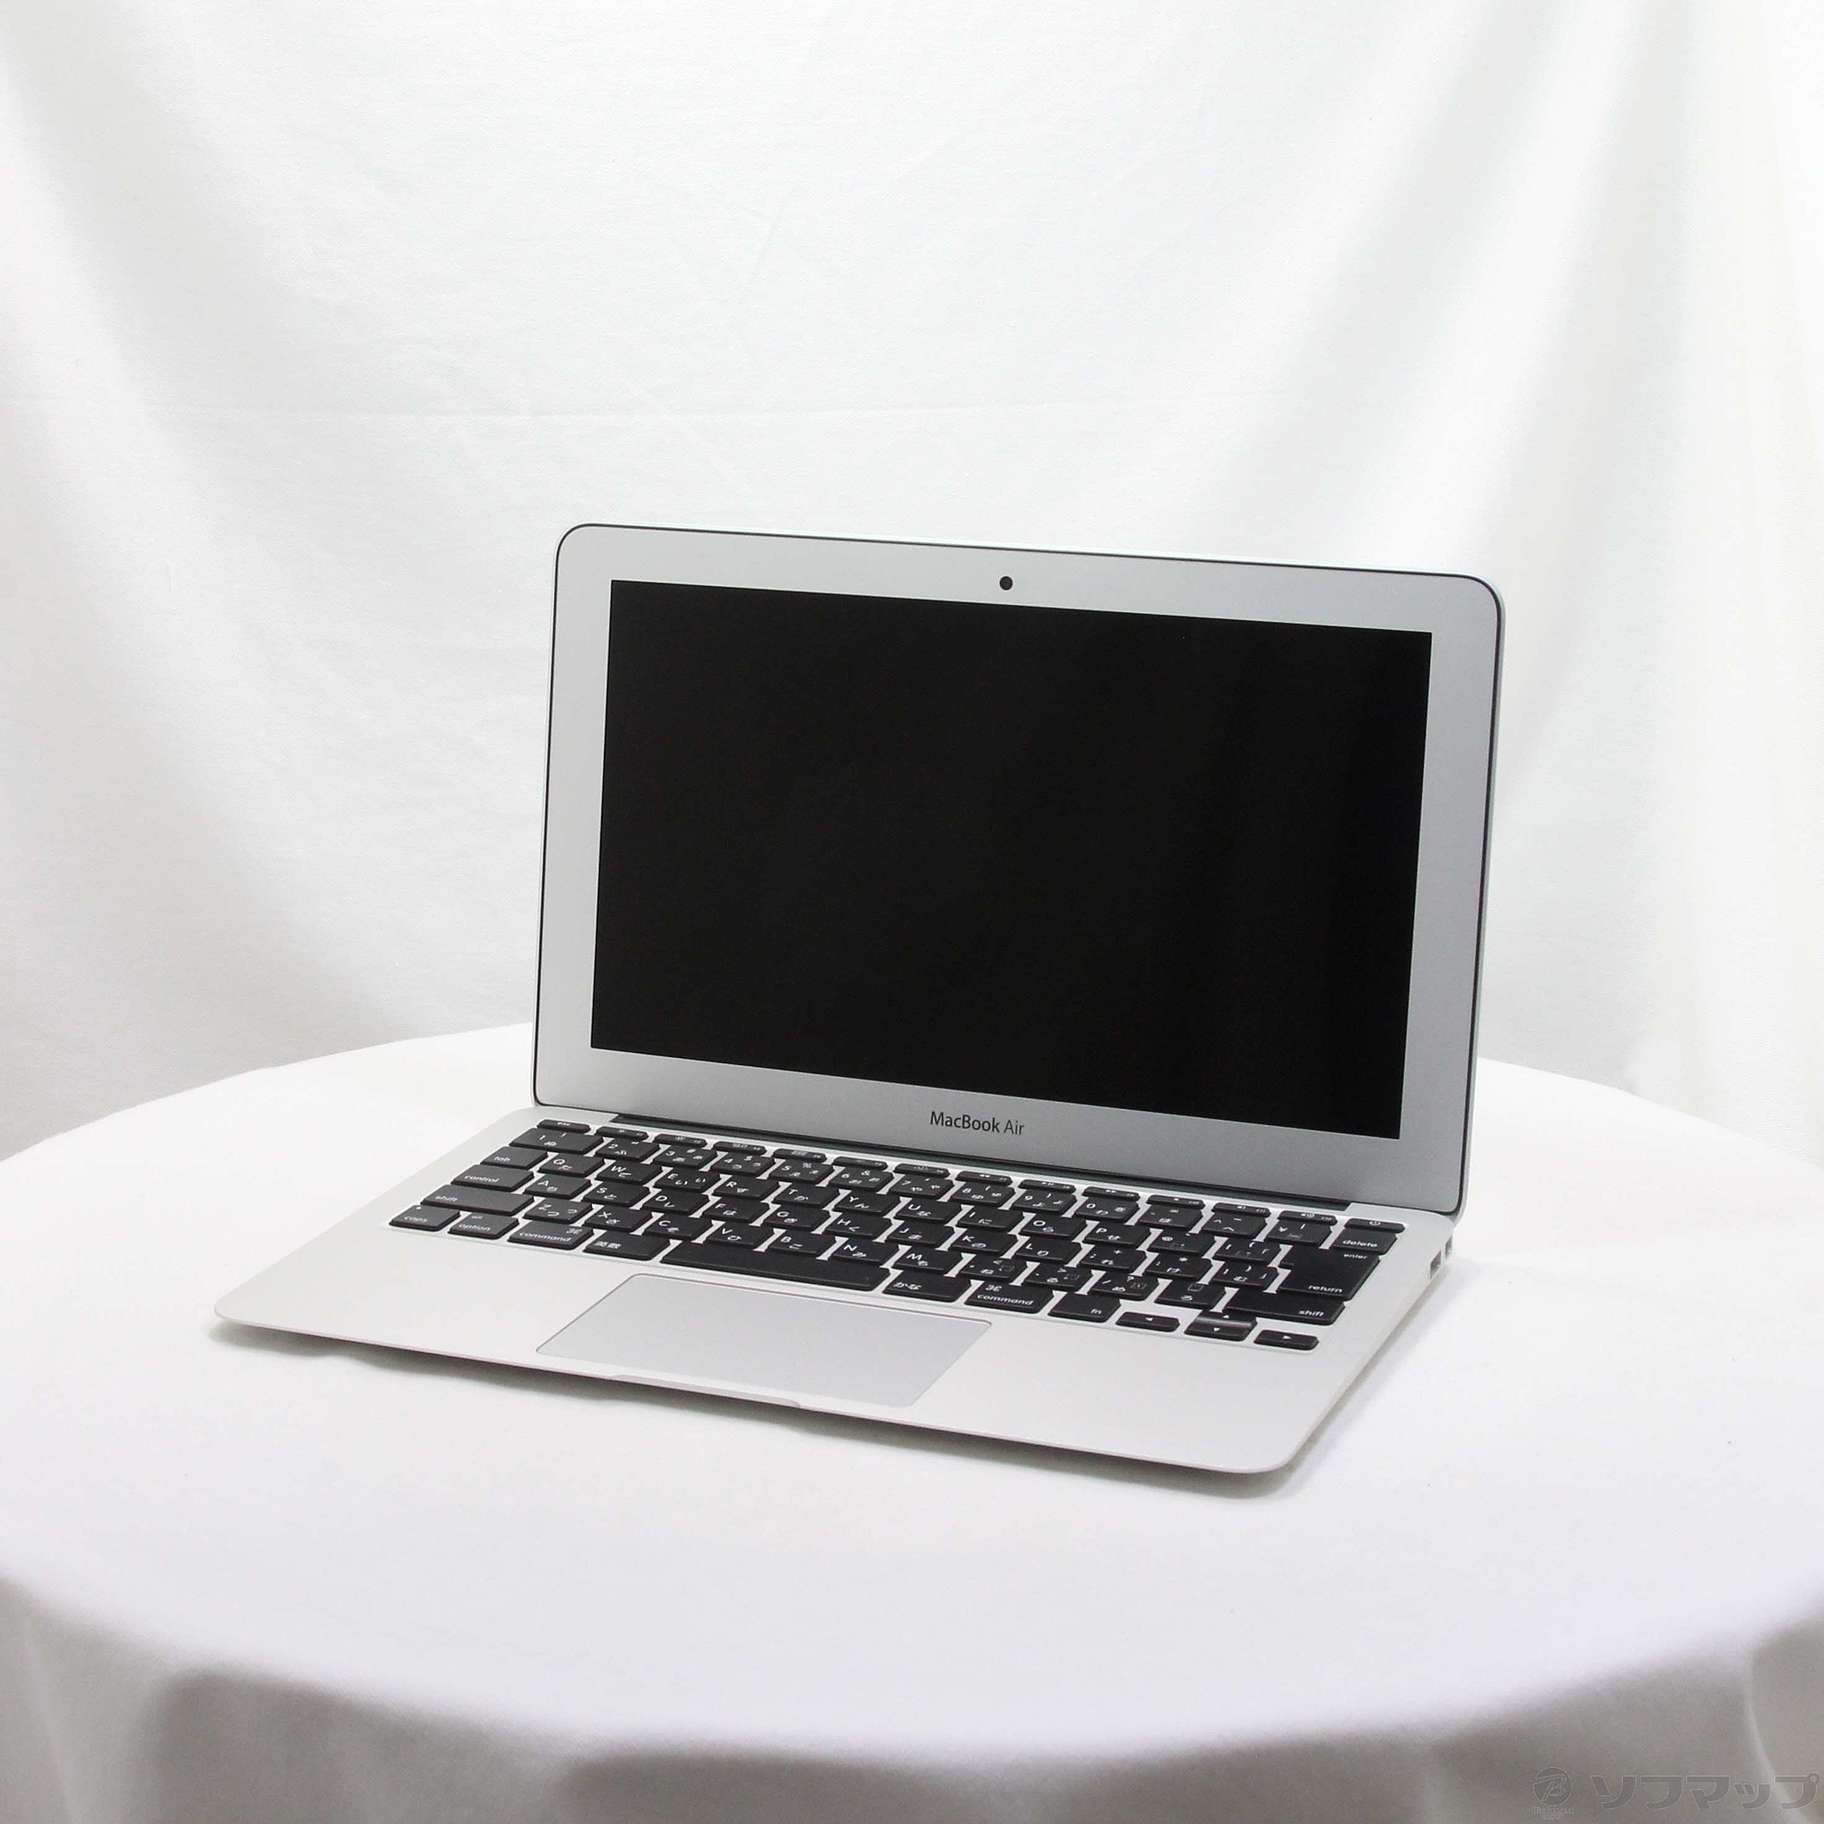 Apple MacBook Air  11-inch Mid2013